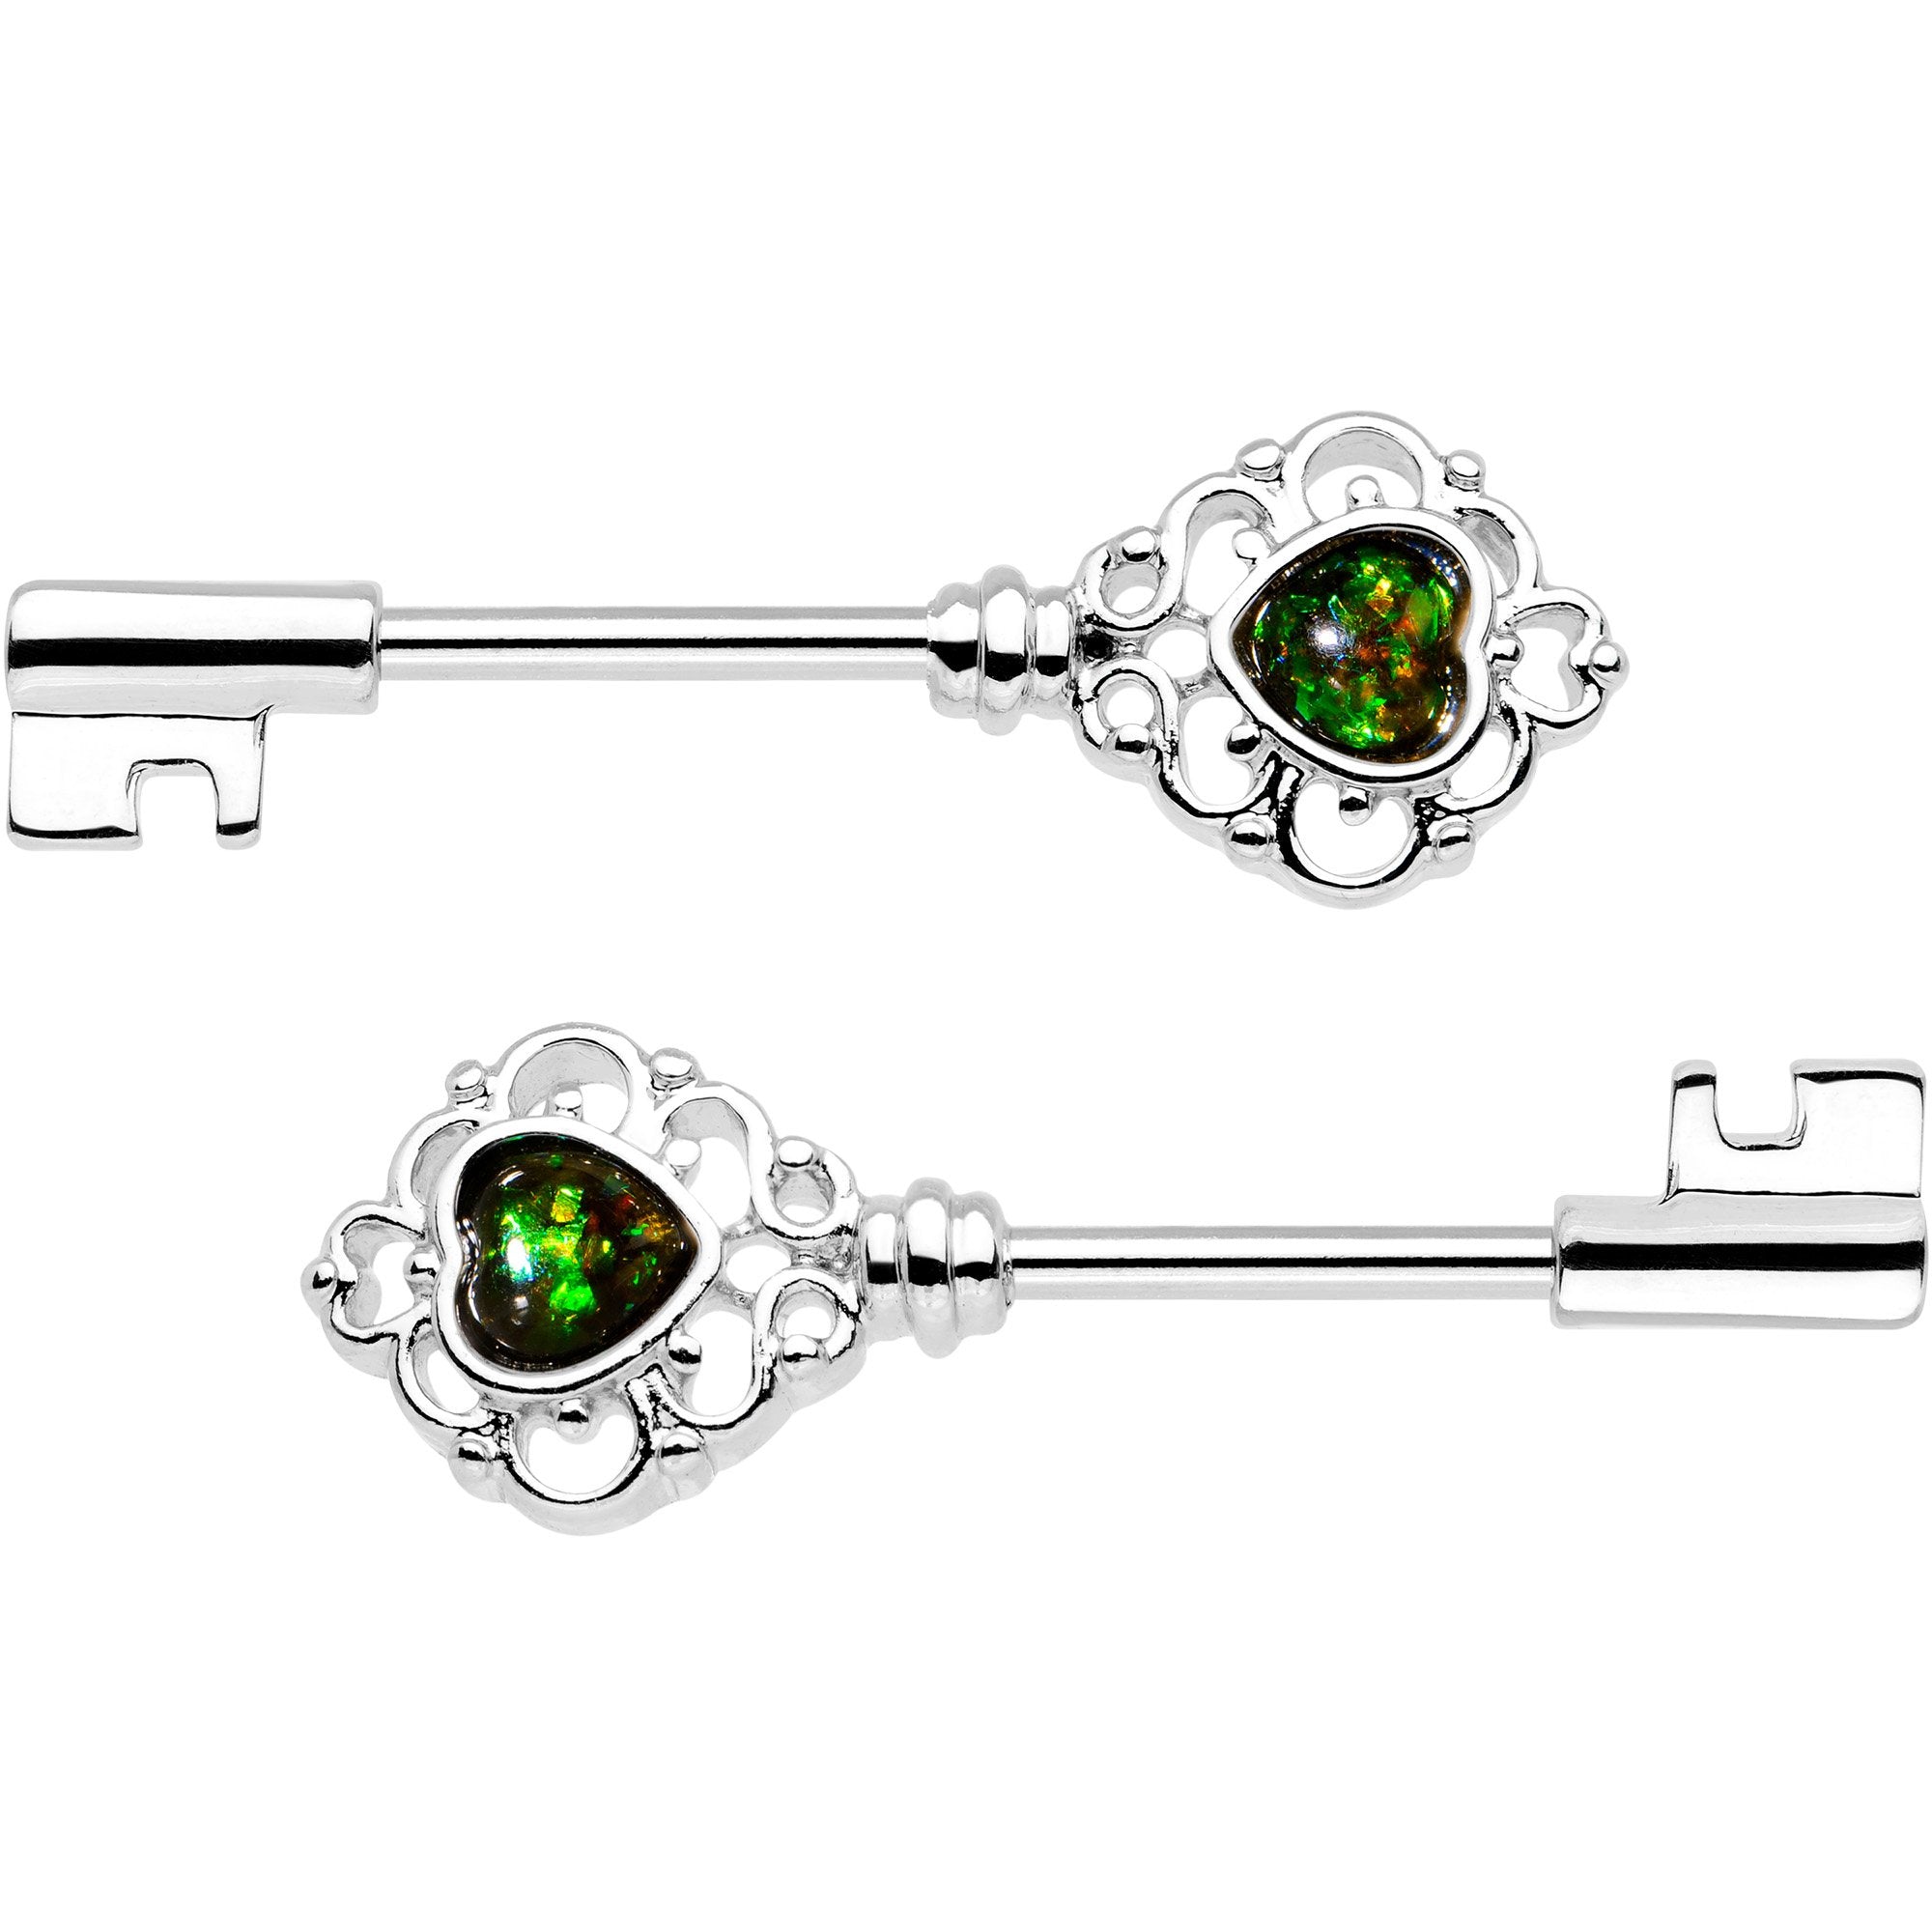 1/2 Green Faux Opal Heart Key Barbell Nipple Ring Set